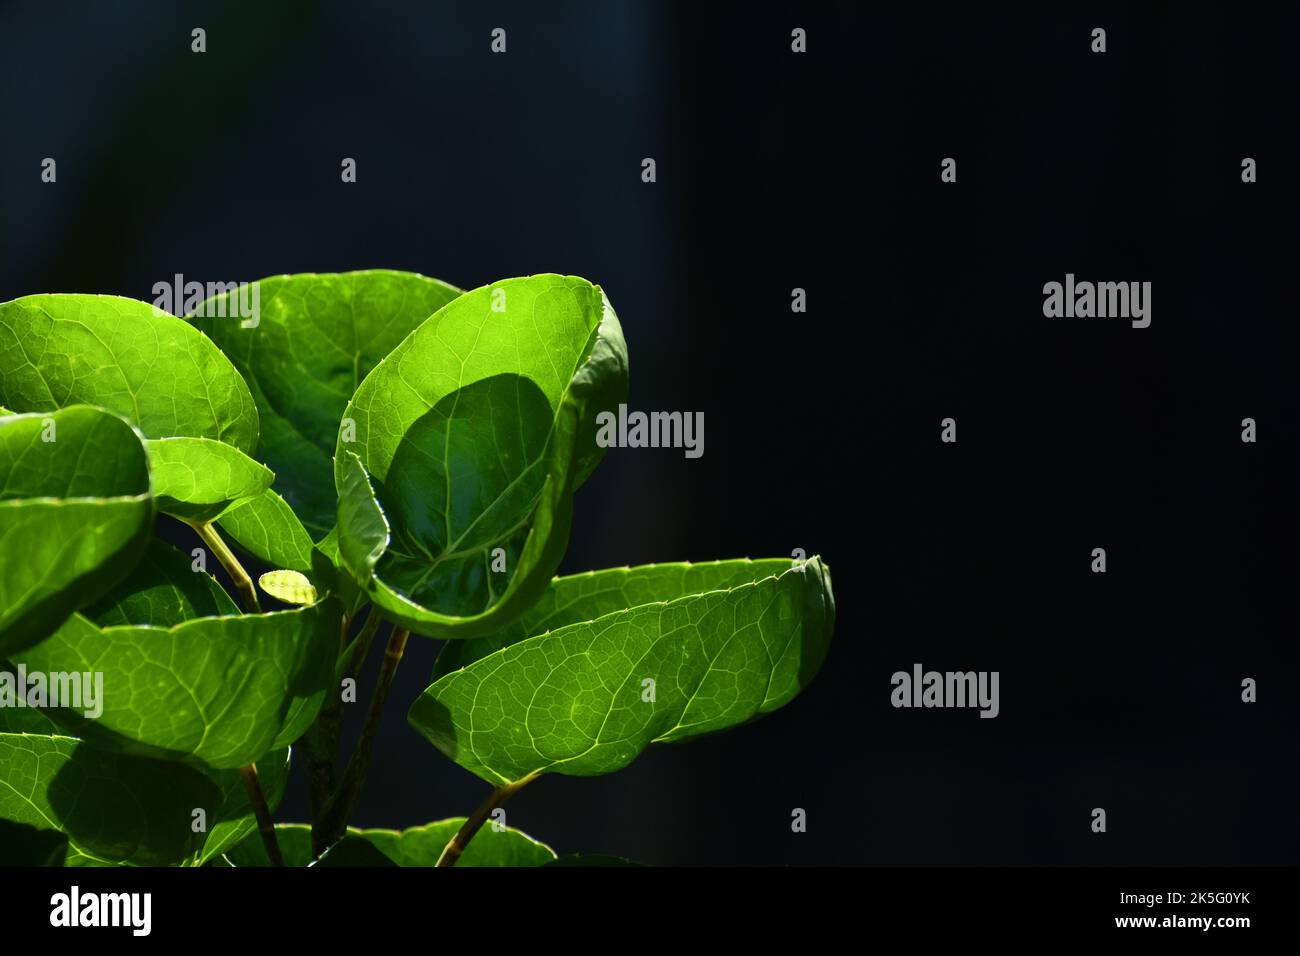 Bowl shaped leaves of Plum aralia against dark background. Stock Photo